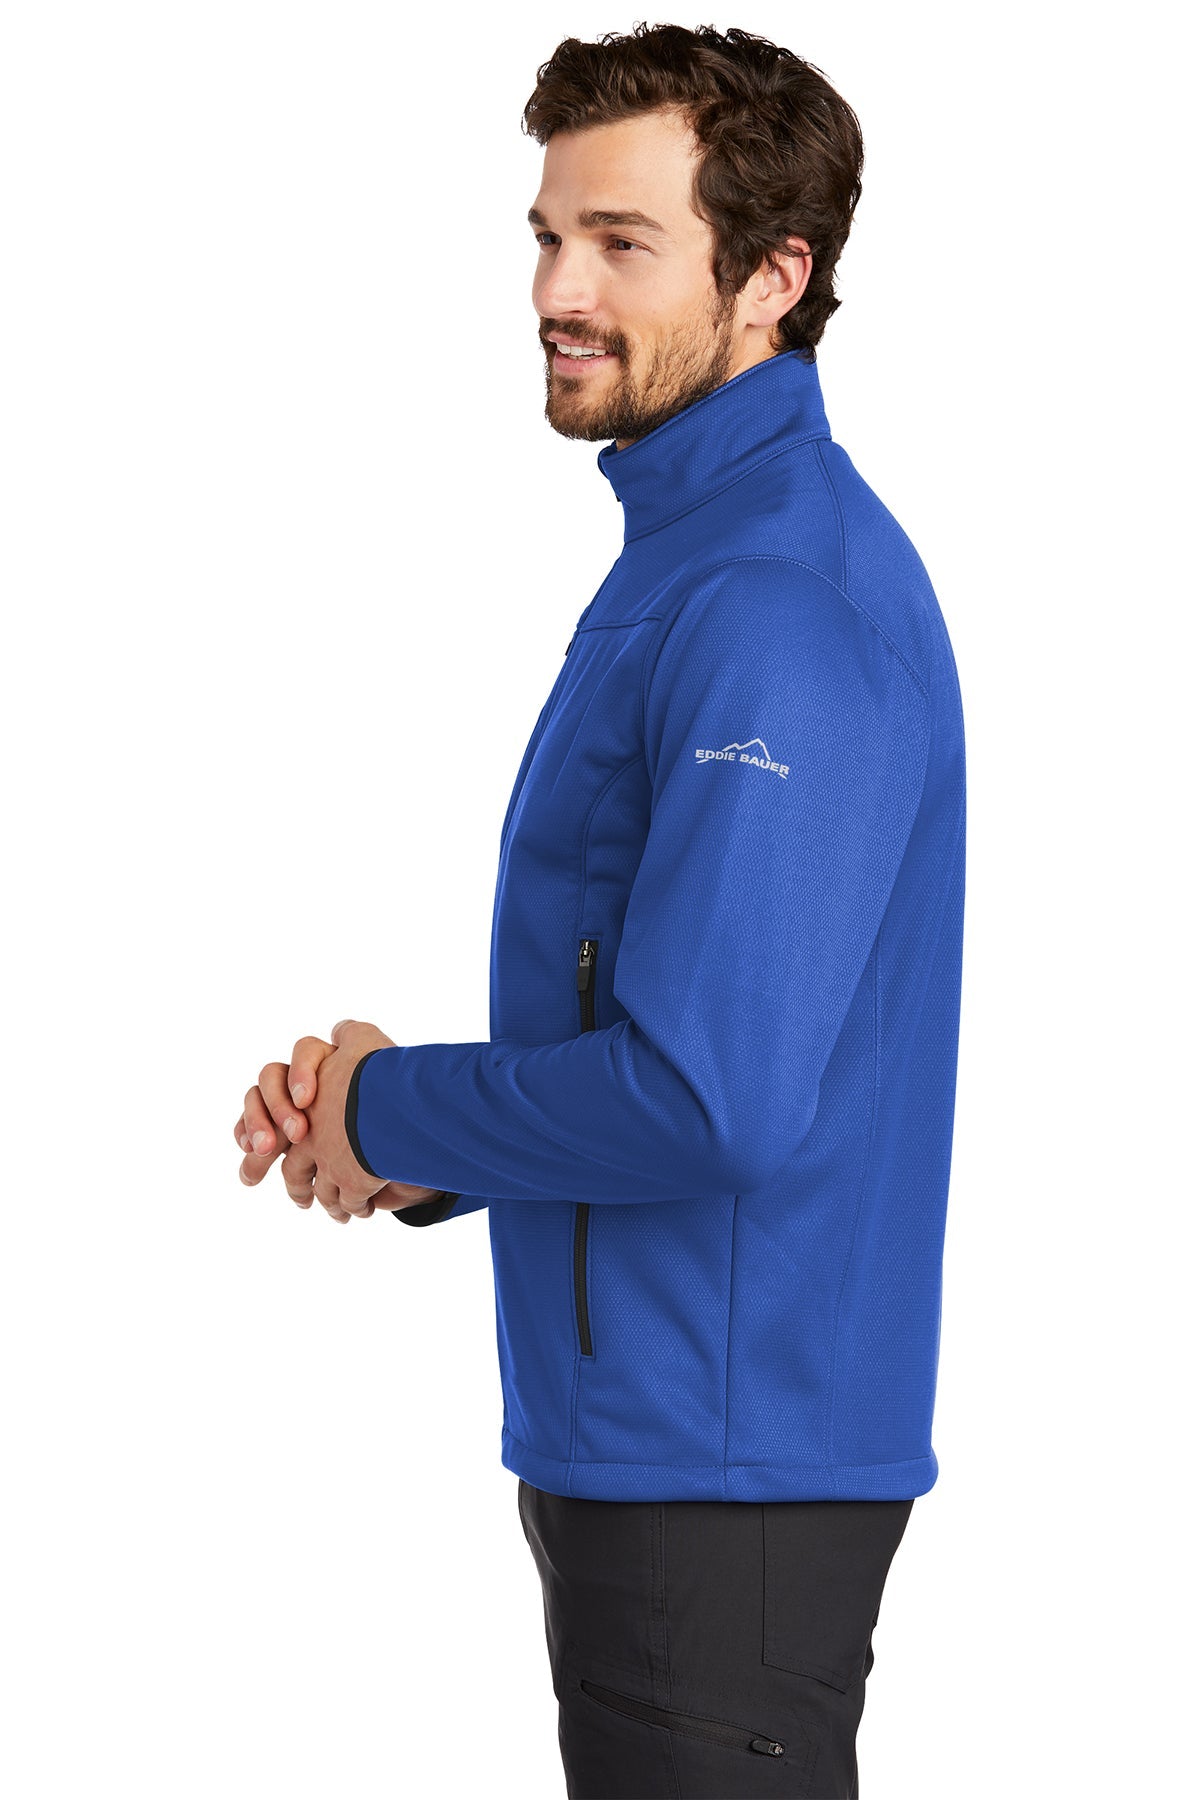 eddie bauer_eb538 _cobalt blue_company_logo_jackets